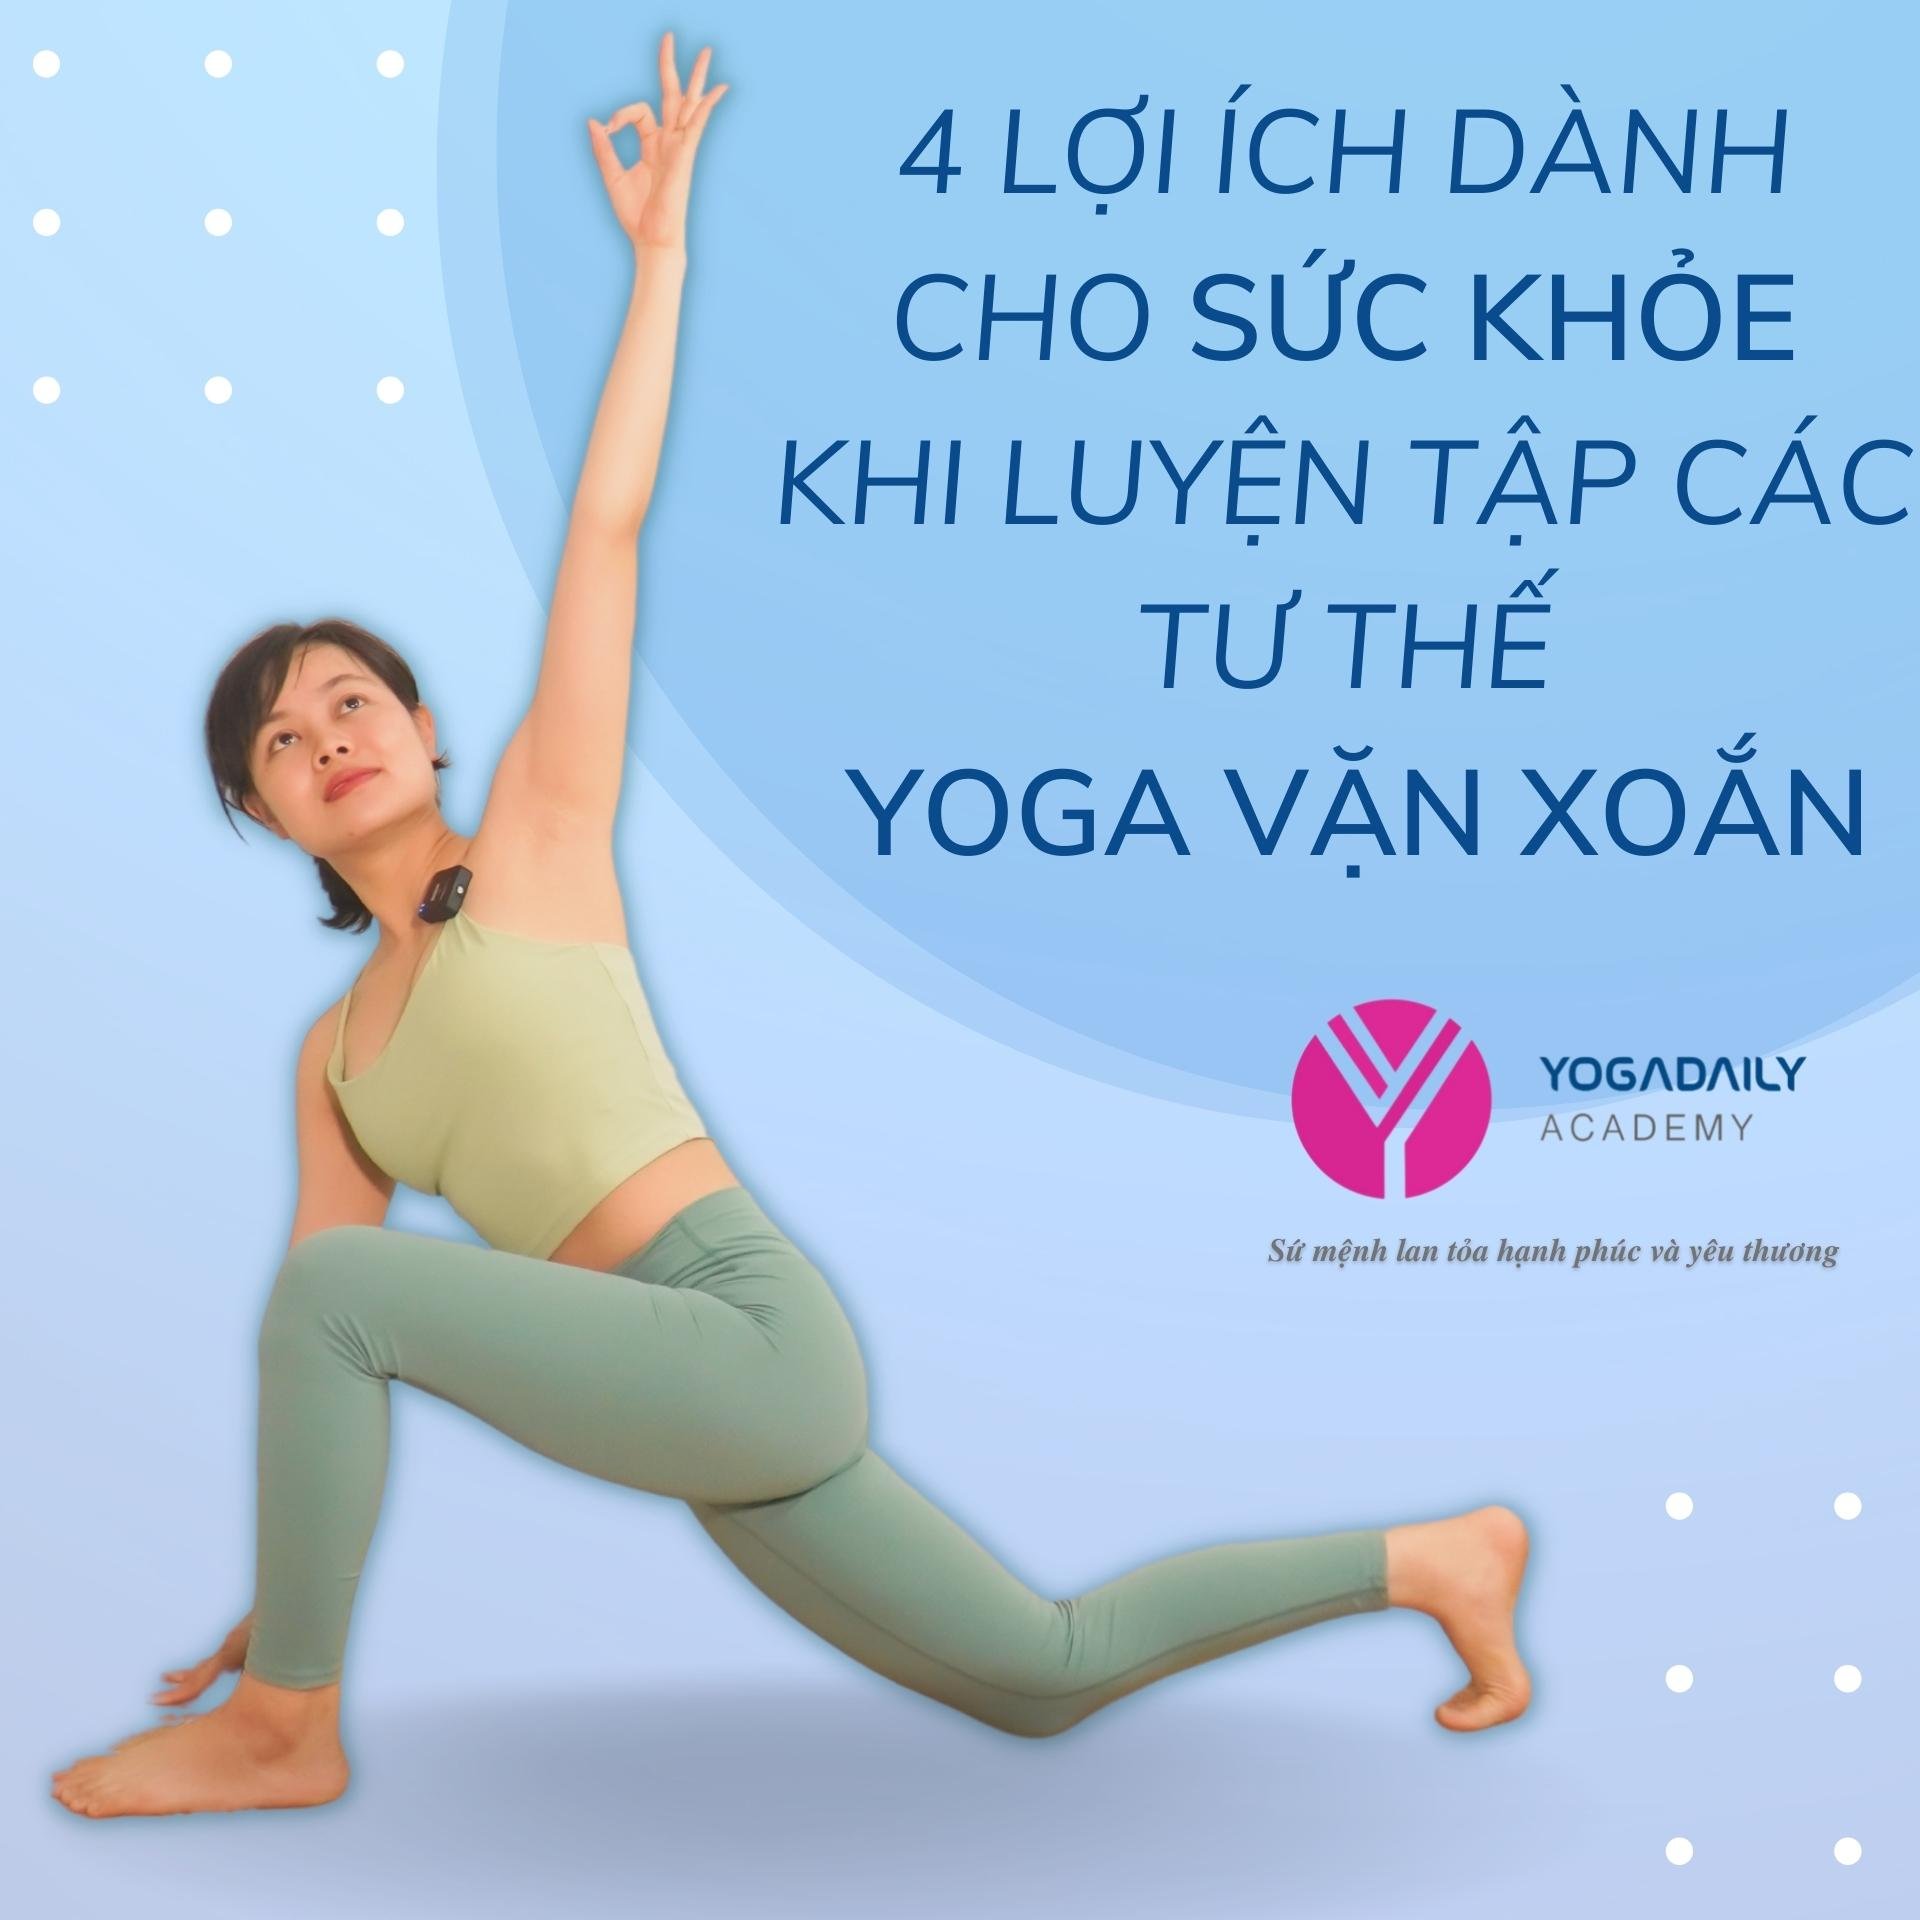 Loi ich cua Yoga van xoan danh cho suc khoe